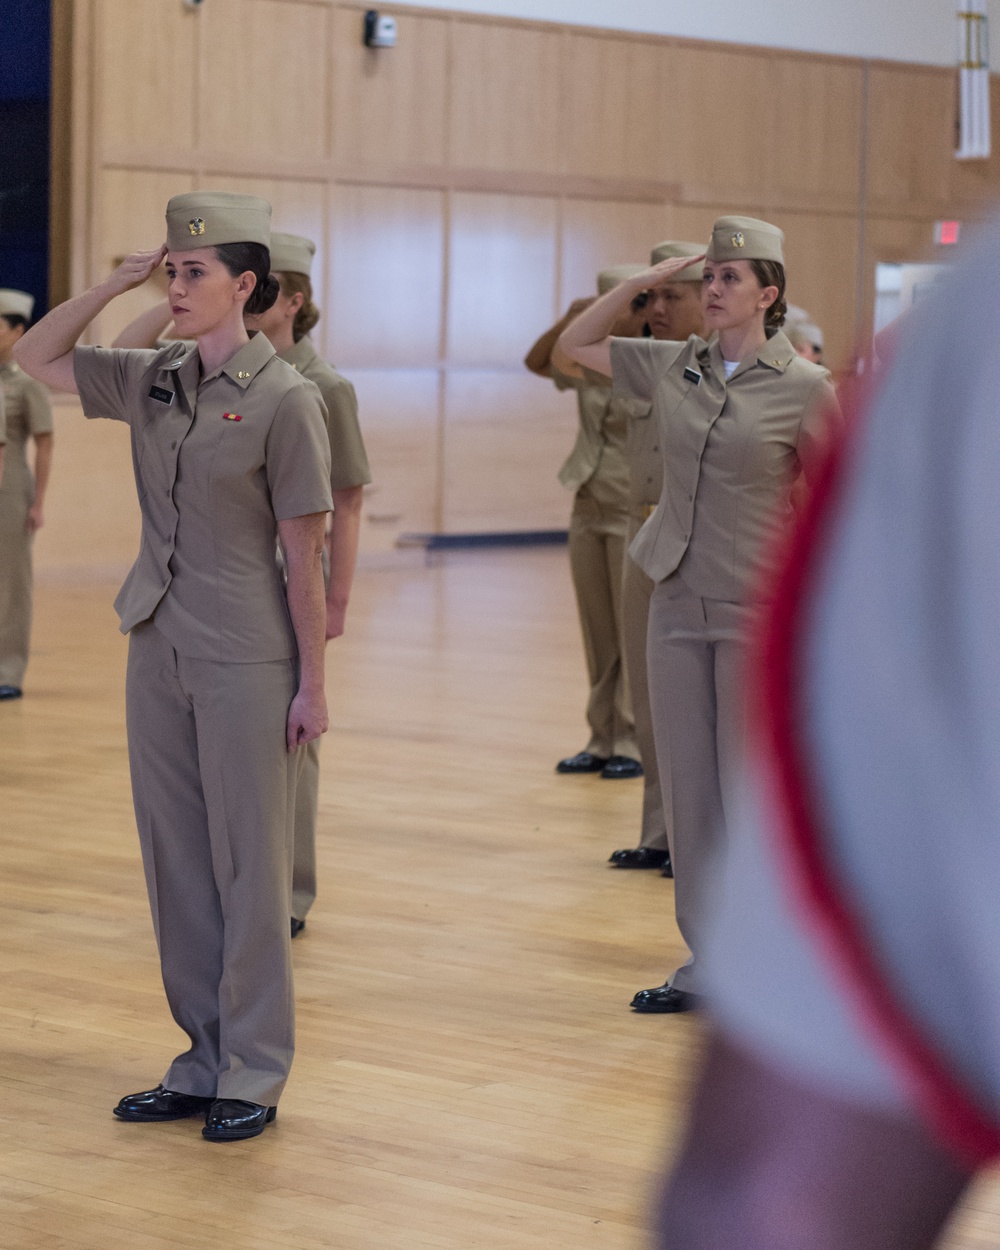 191107-N-TE695-0004 NEWPORT, R.I. (Nov. 7, 2019) -- Navy Officer Development School conducts a uniform inspection